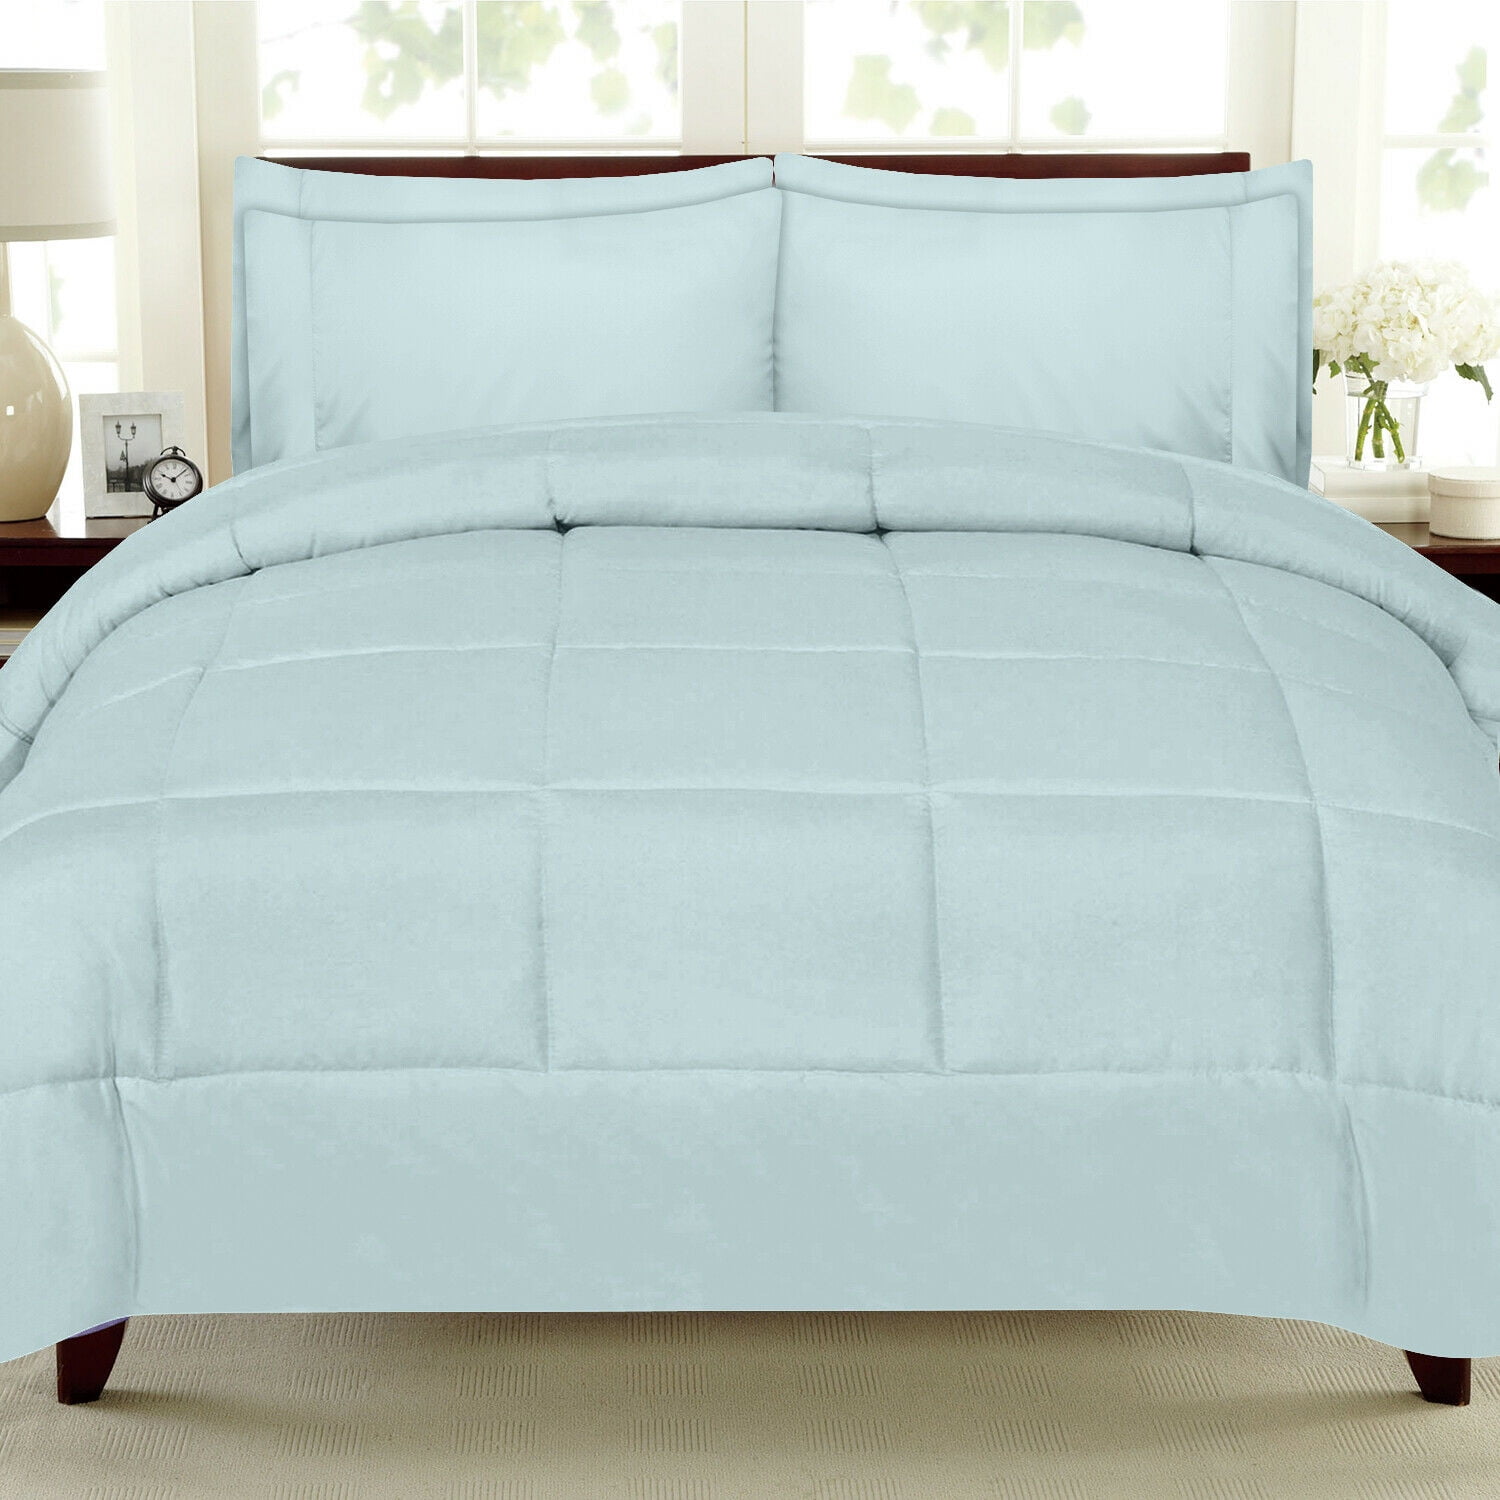 Lg Color Selection 7 Piece Bed-In-A-Bag Down Alternative Comforter & Sheet Set 